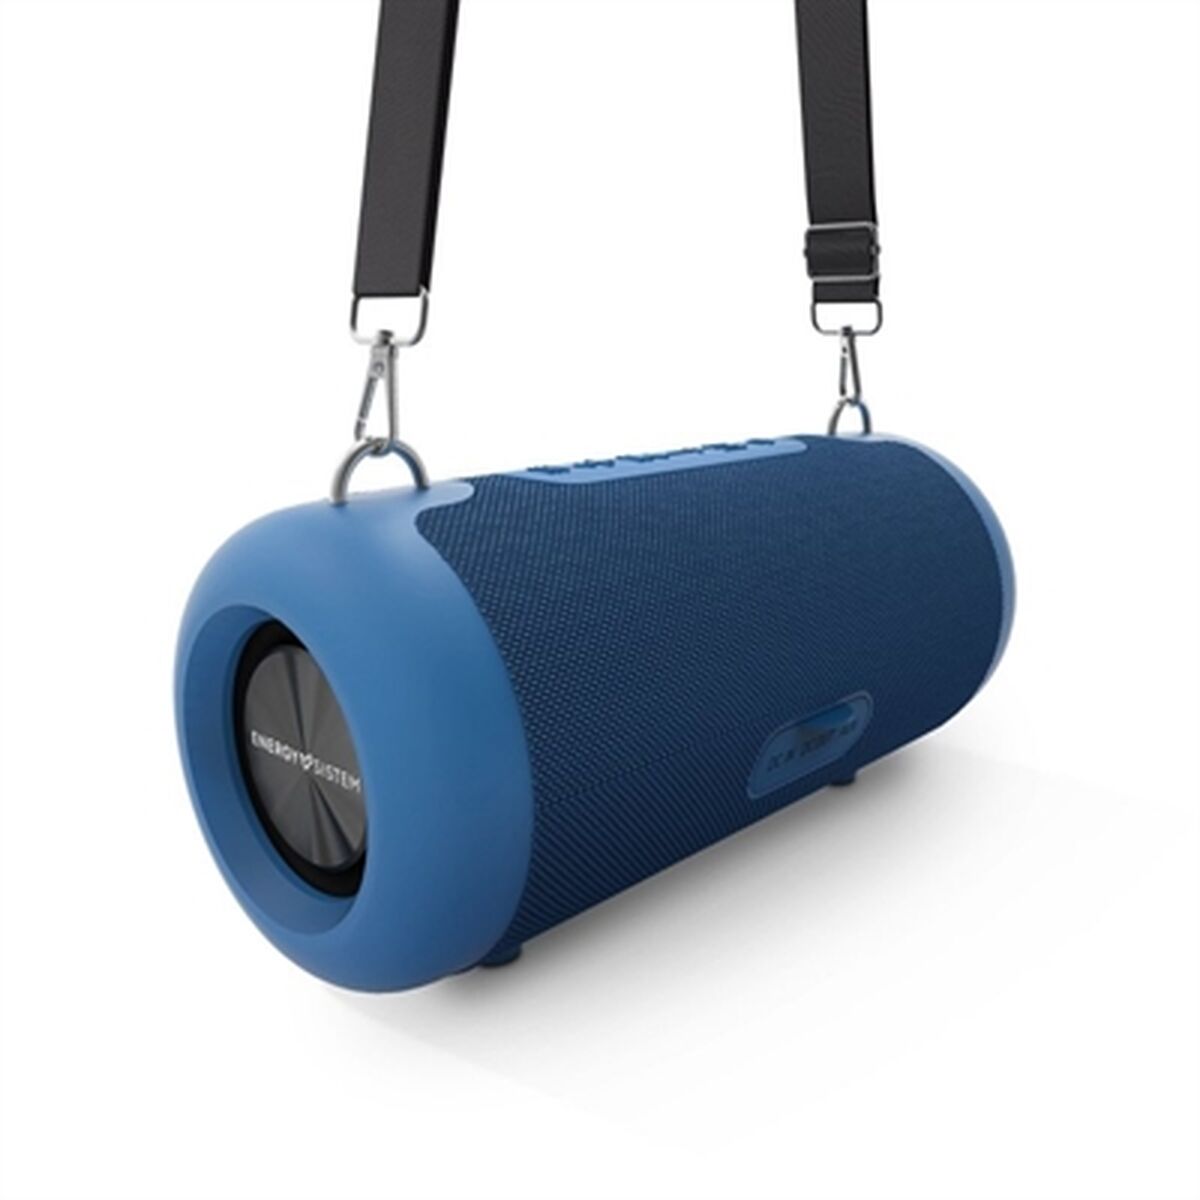 Dankzij de draagbare Bluetooth®-luidsprekers Energy Sistem Urban Box 6 Blauw 40 W